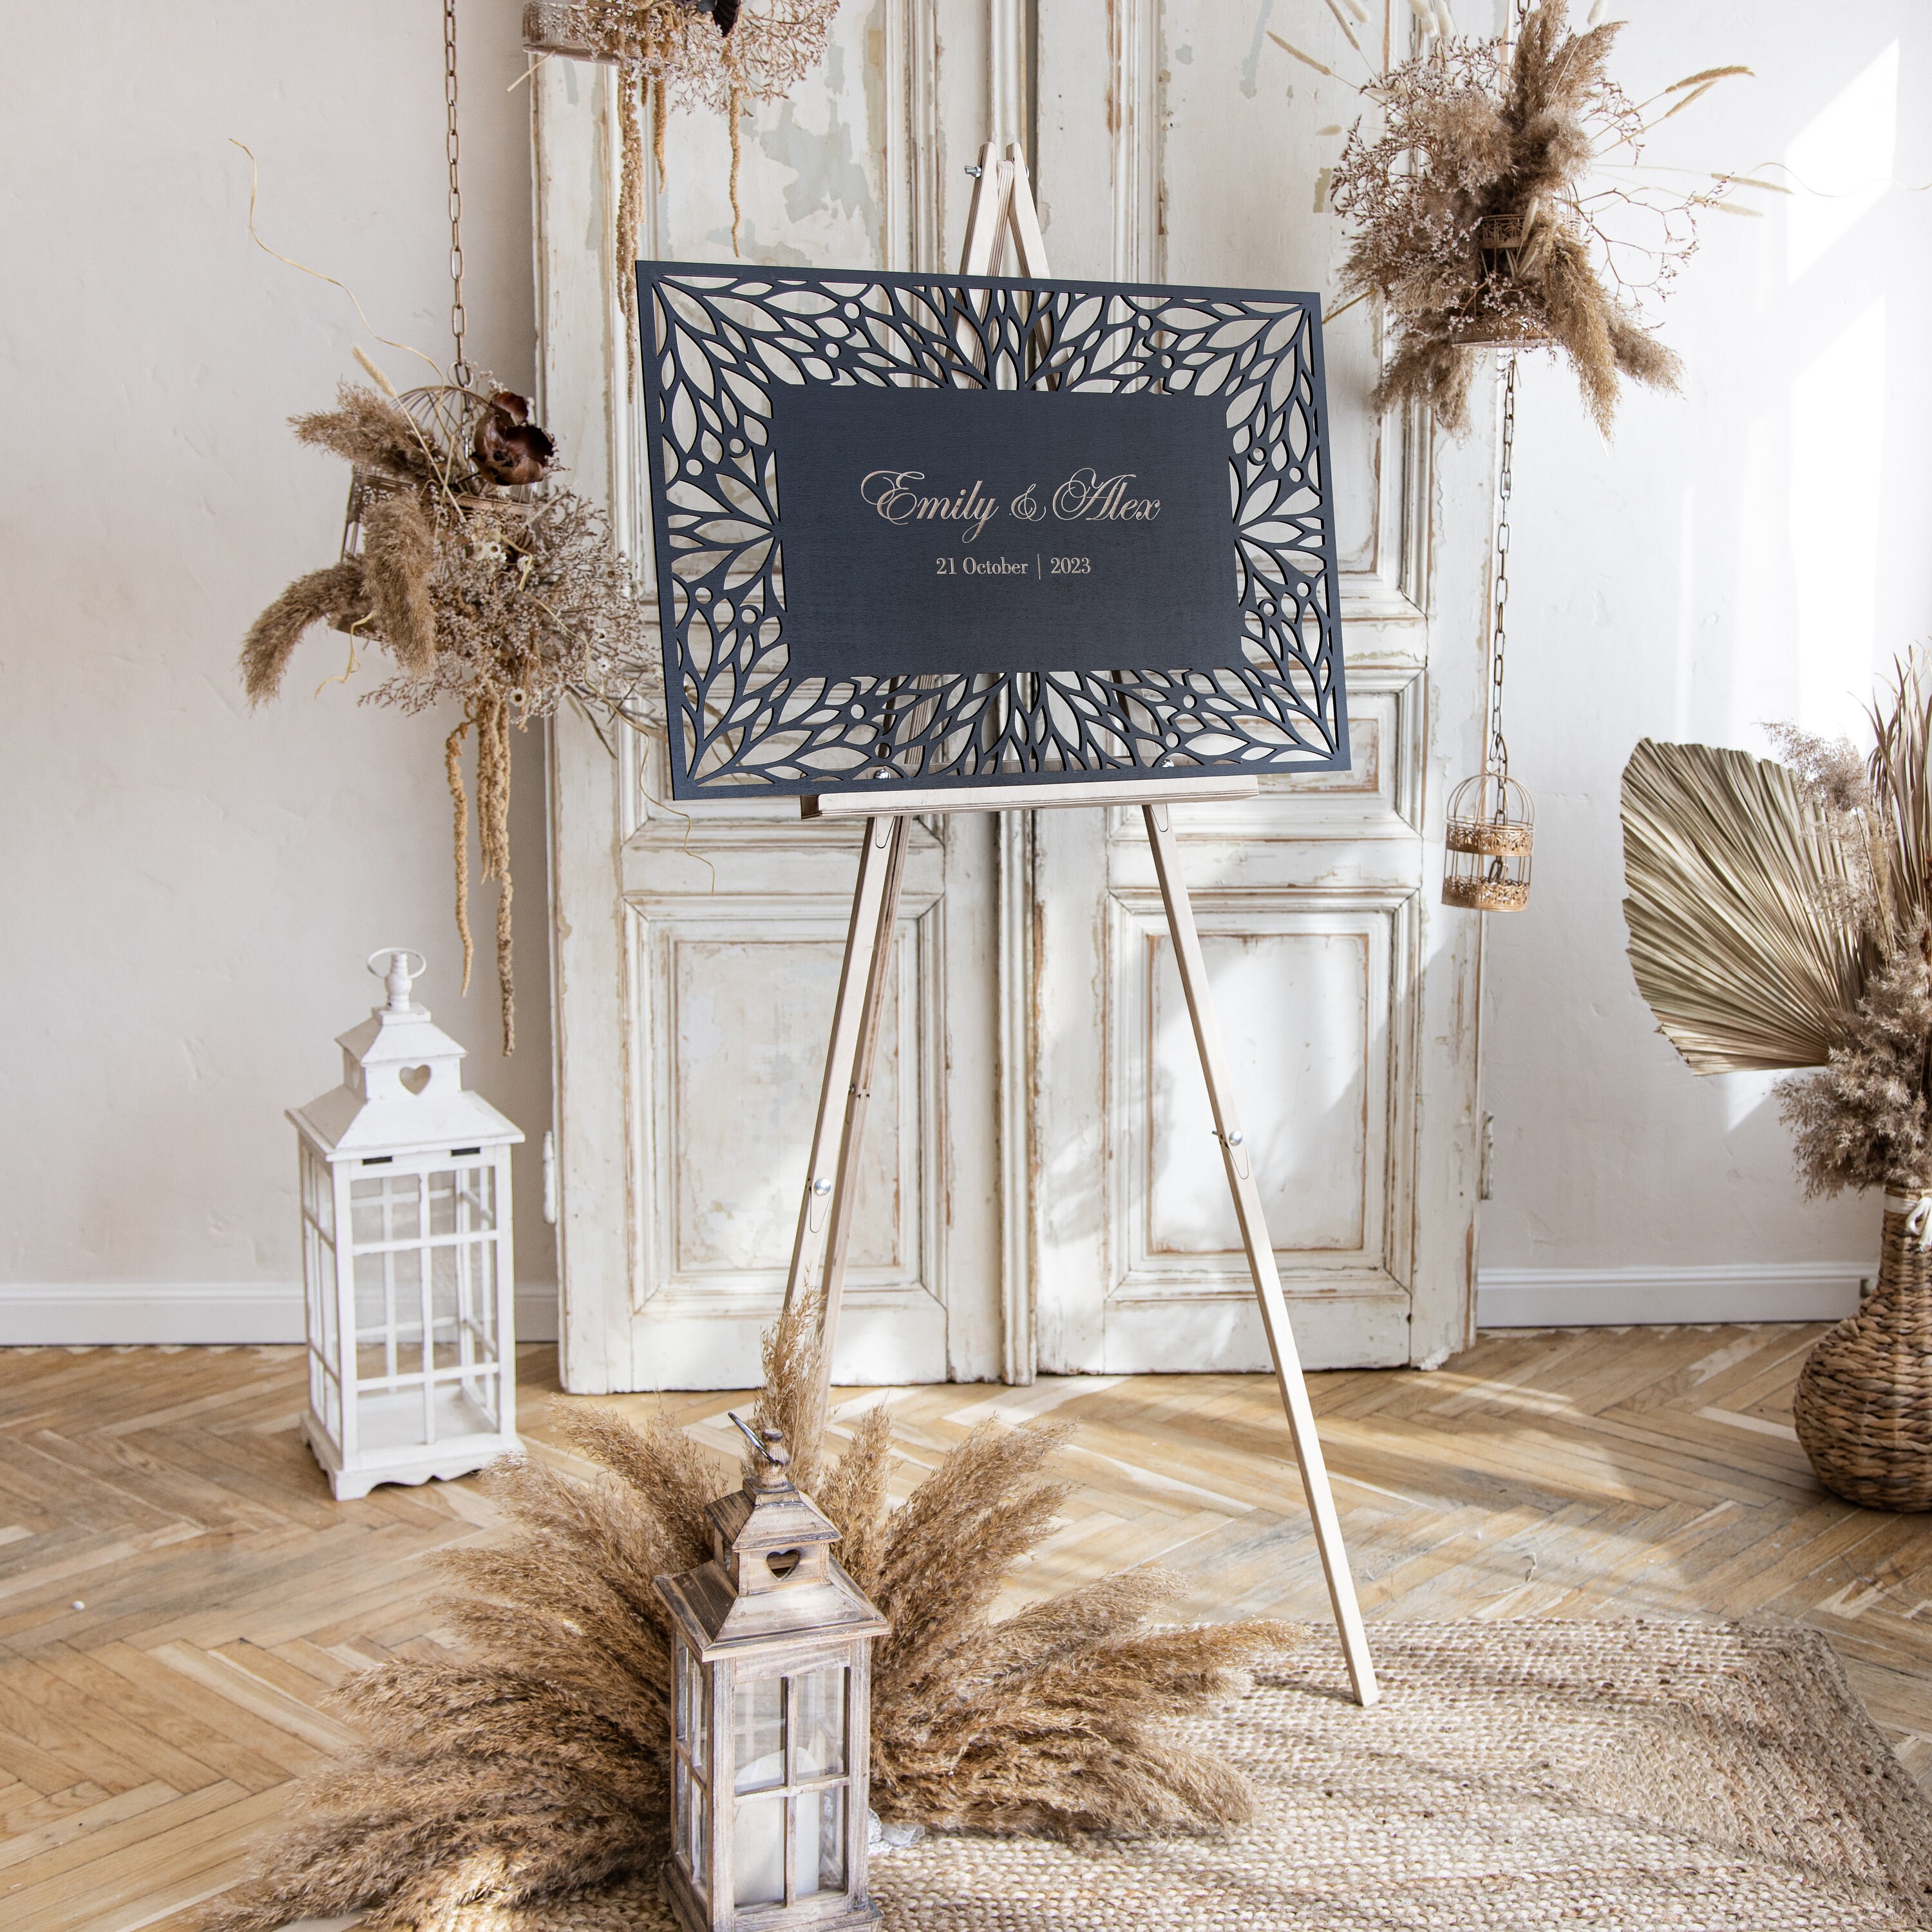 Standing Floor Easel, Rustic Display for Wedding Welcome Sign